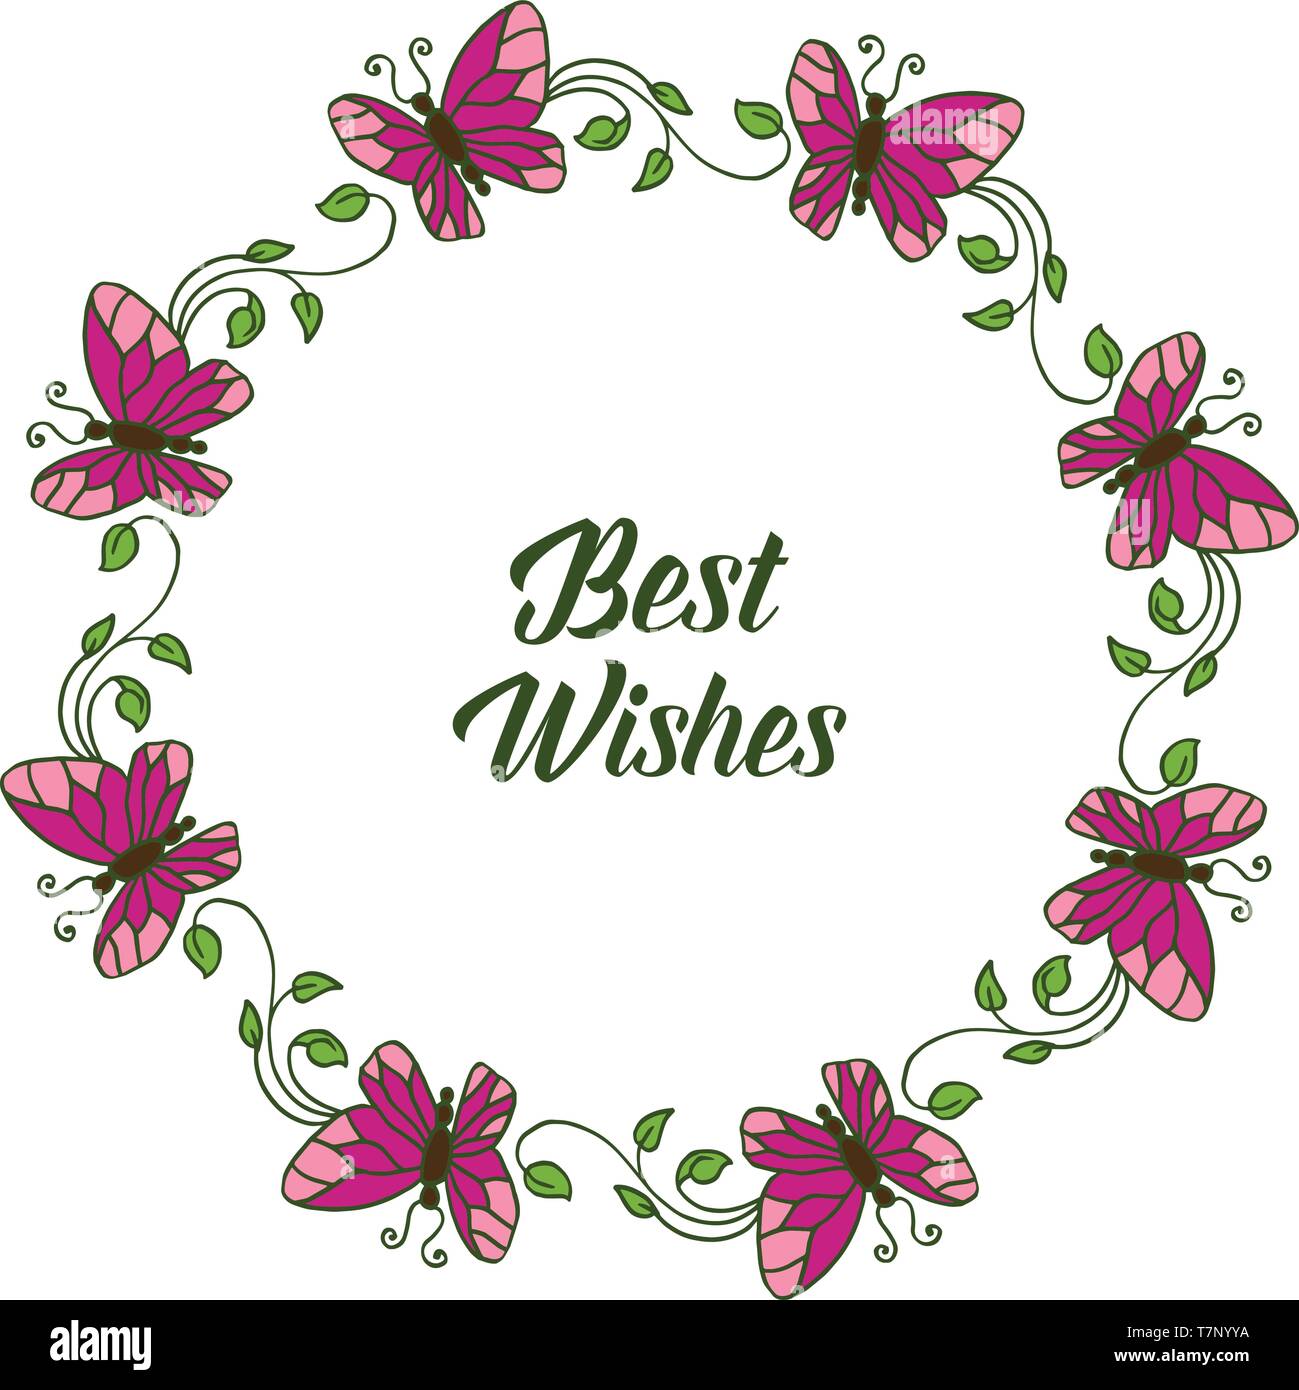 Vector illustration greeting card best wishes for leaf flower ...